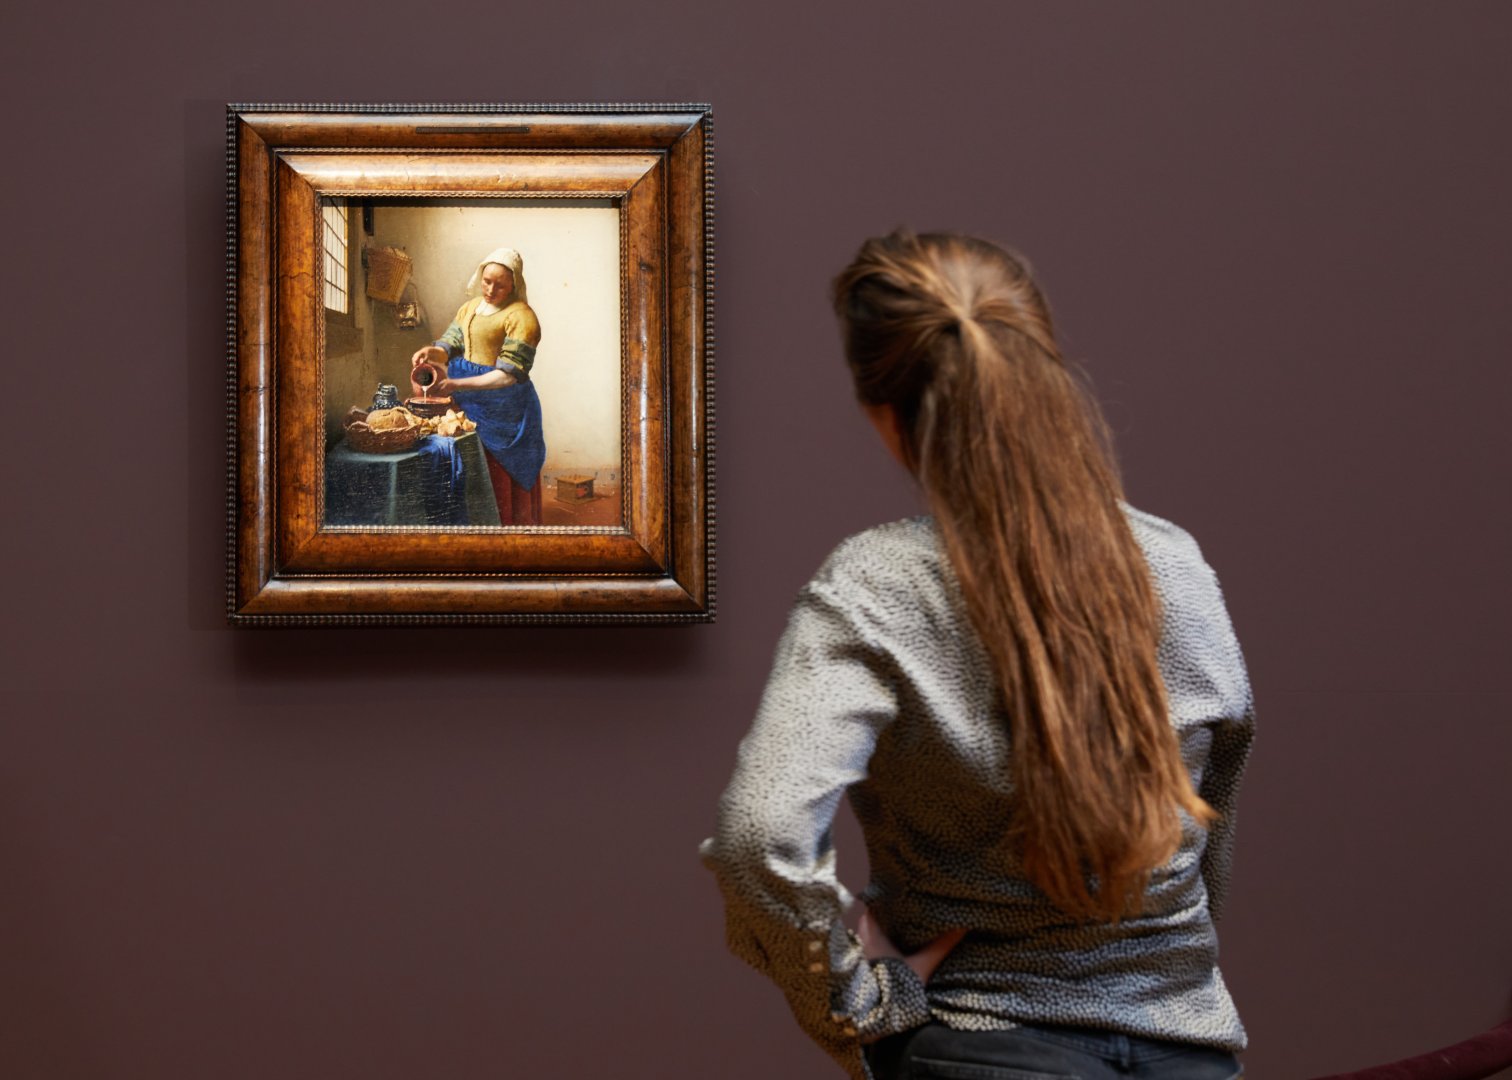 Vermeer-kiállítás - fotó: Rijksmuseum/ Henk Wildschut